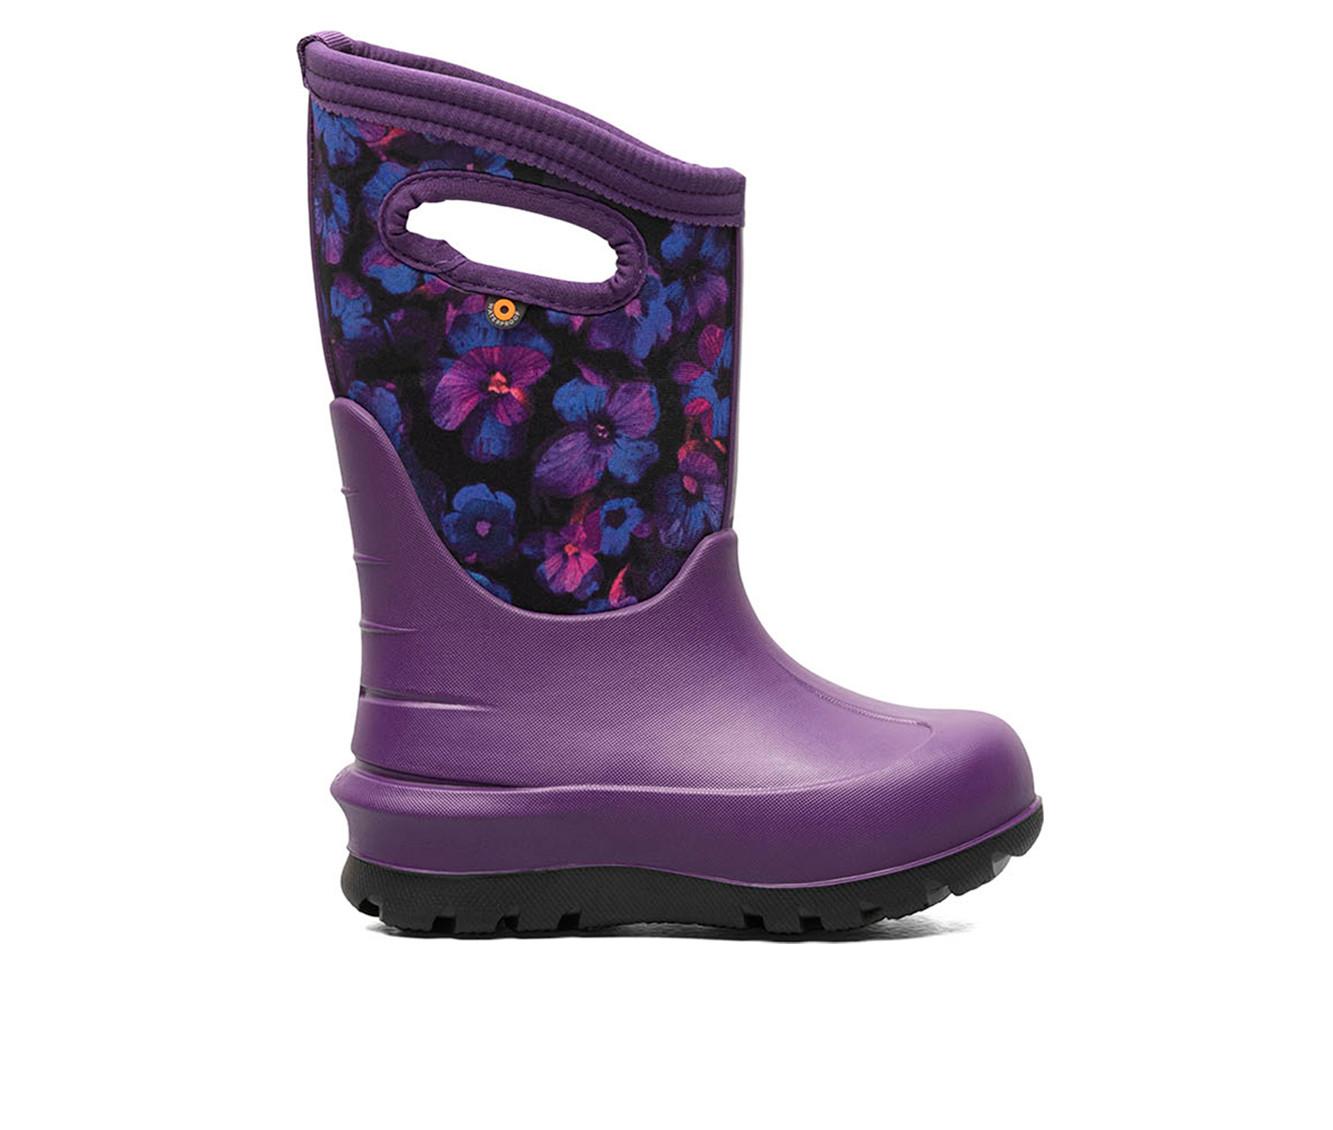 Girls' Bogs Footwear Toddler & Little Kid Neo Classic Petals Winter Boots